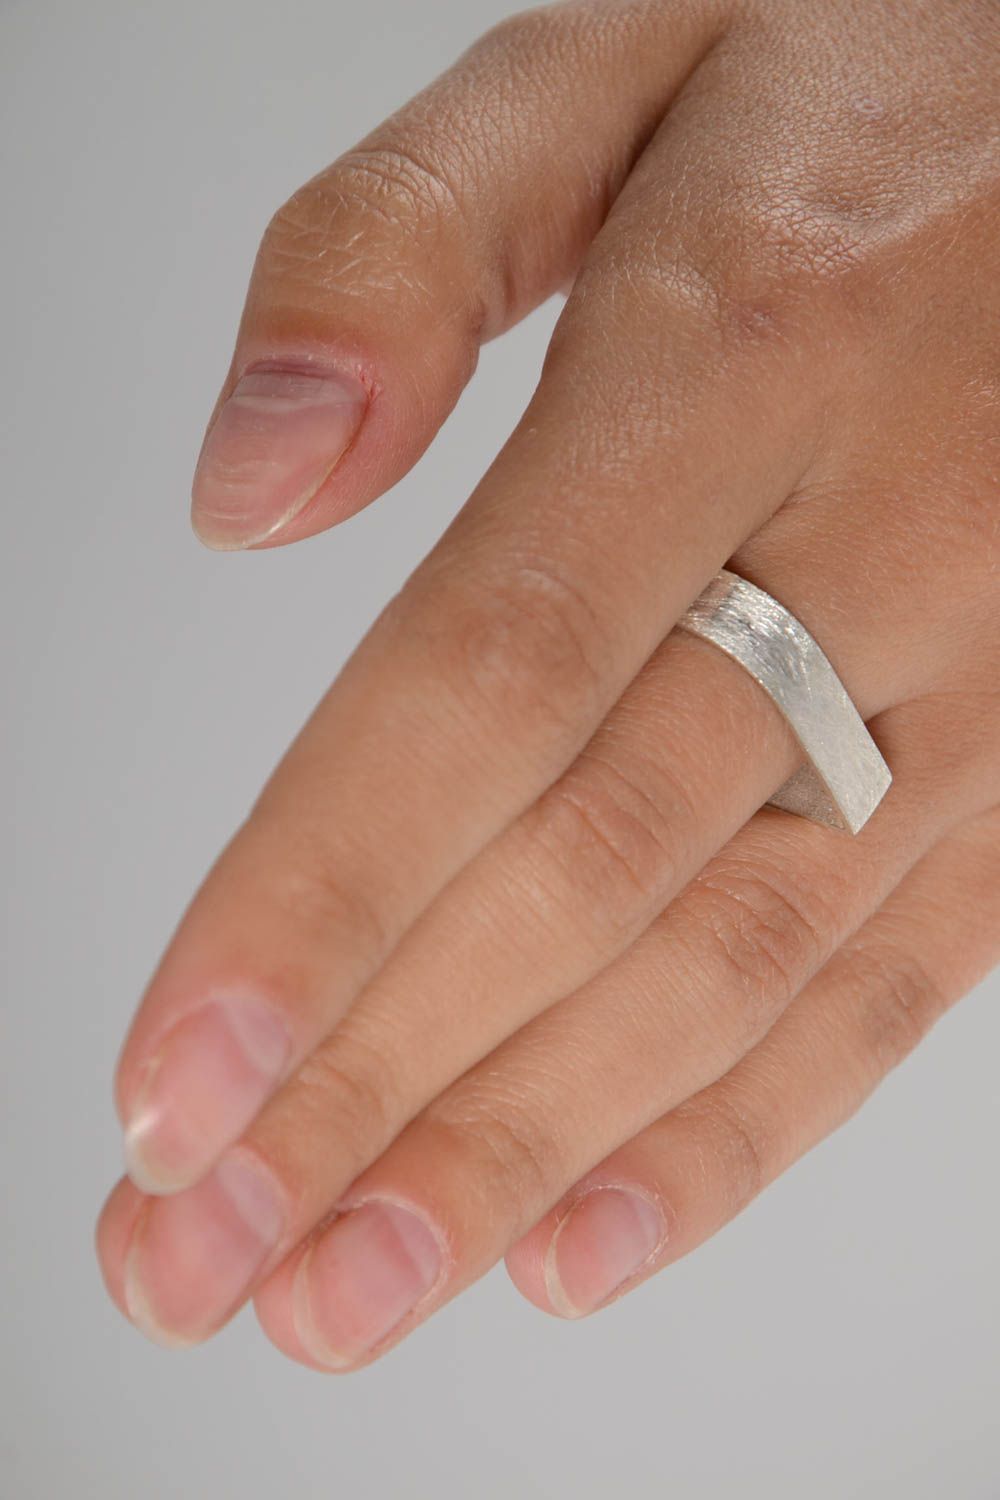 Handmade Schmuck Ring Damen Modeschmuck Accessoire für Frauen aus Silber foto 3